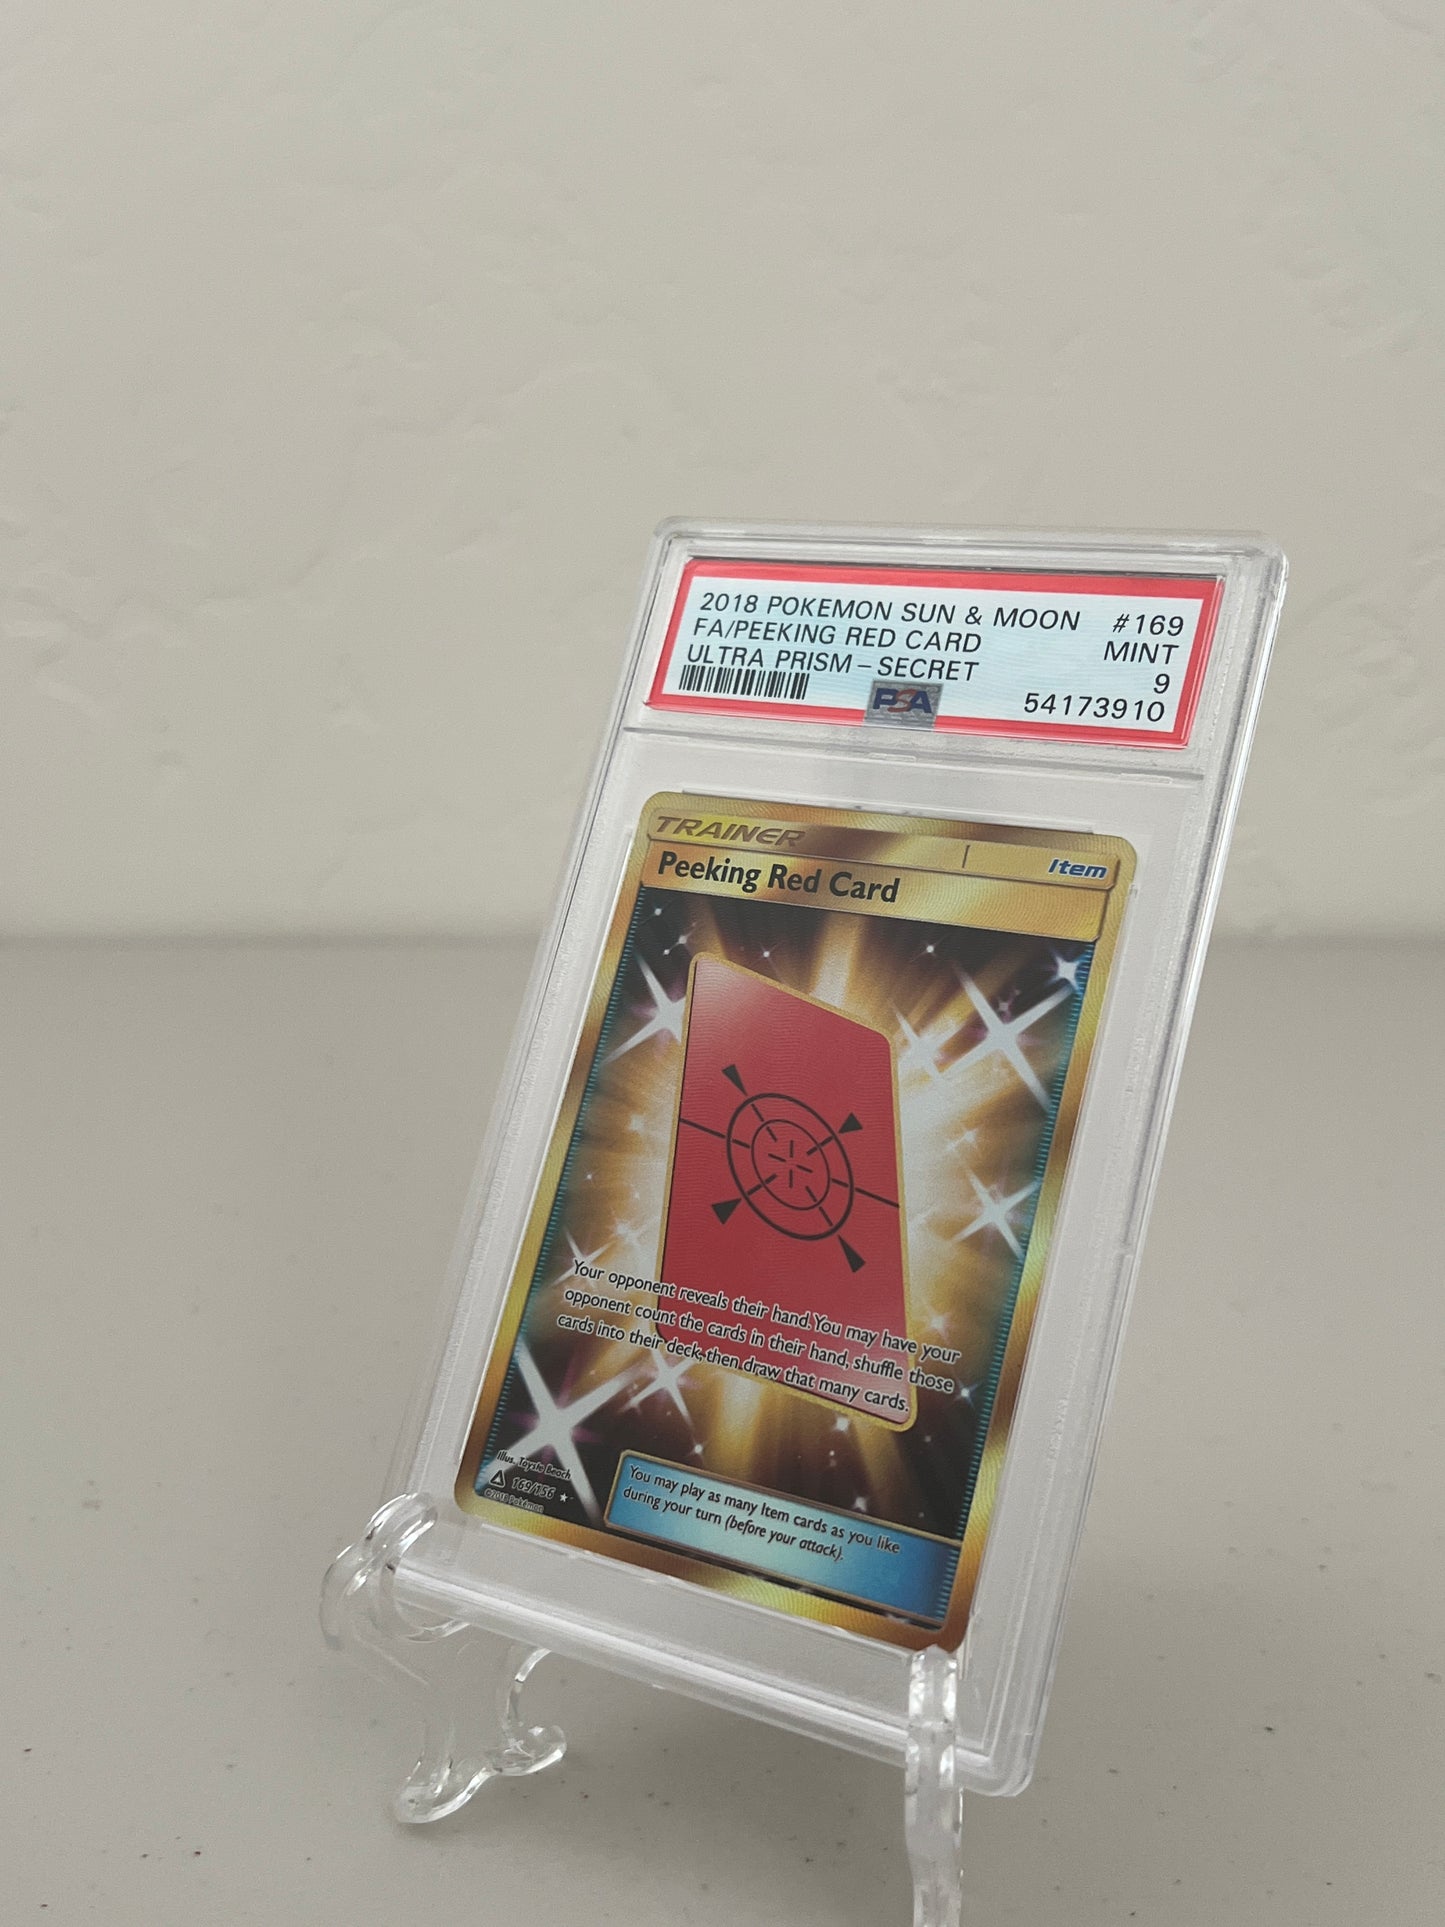 2018 Pokemon Ultra Prism Secret Peeking Red Card #159 PSA 9